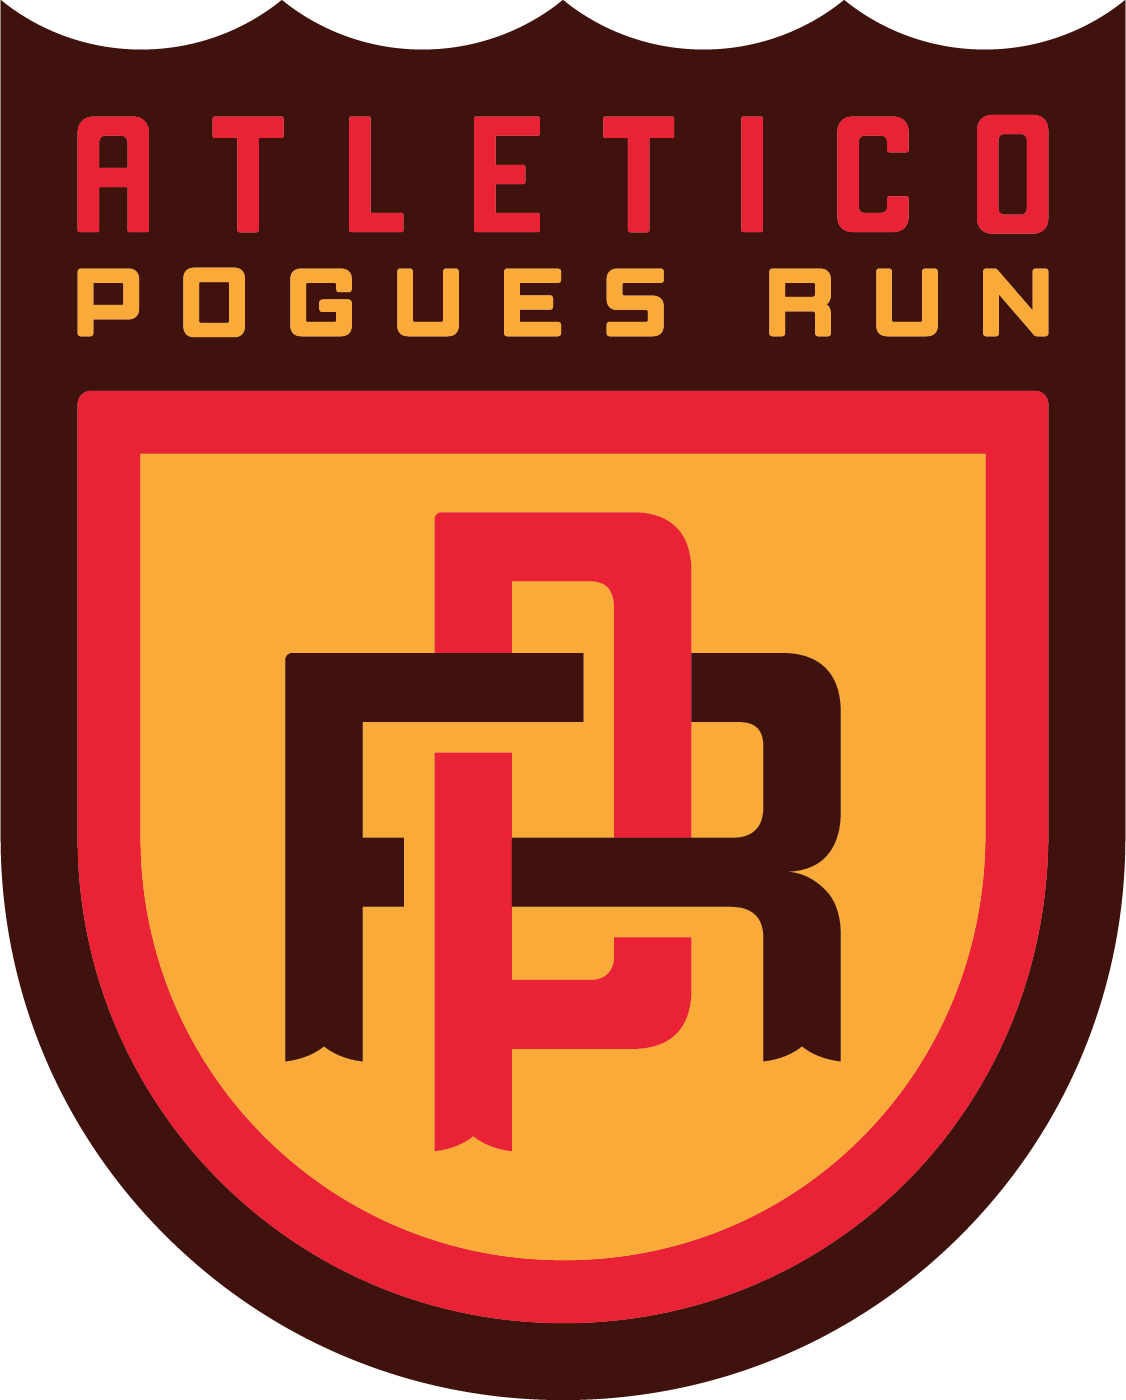 Atletico Pogues Run Team Sponsorships